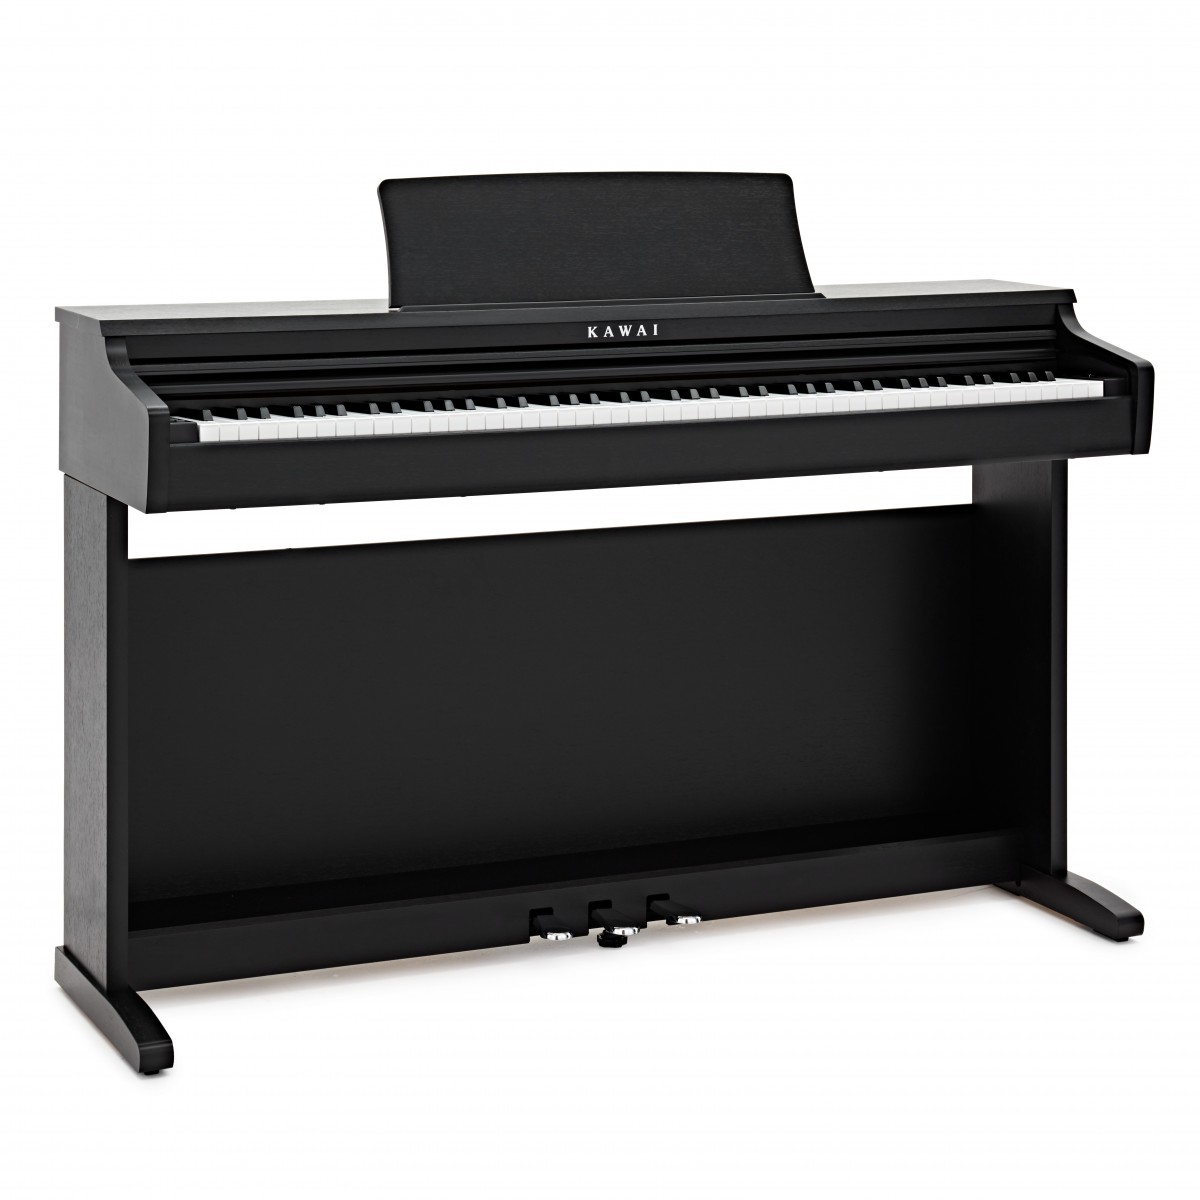 KAWAI KDP120 BLACK SATIN PIANOFORTE DIGITALE 88 TASTI PESATI USB MIDI E BLUETOOTH MIDI 4